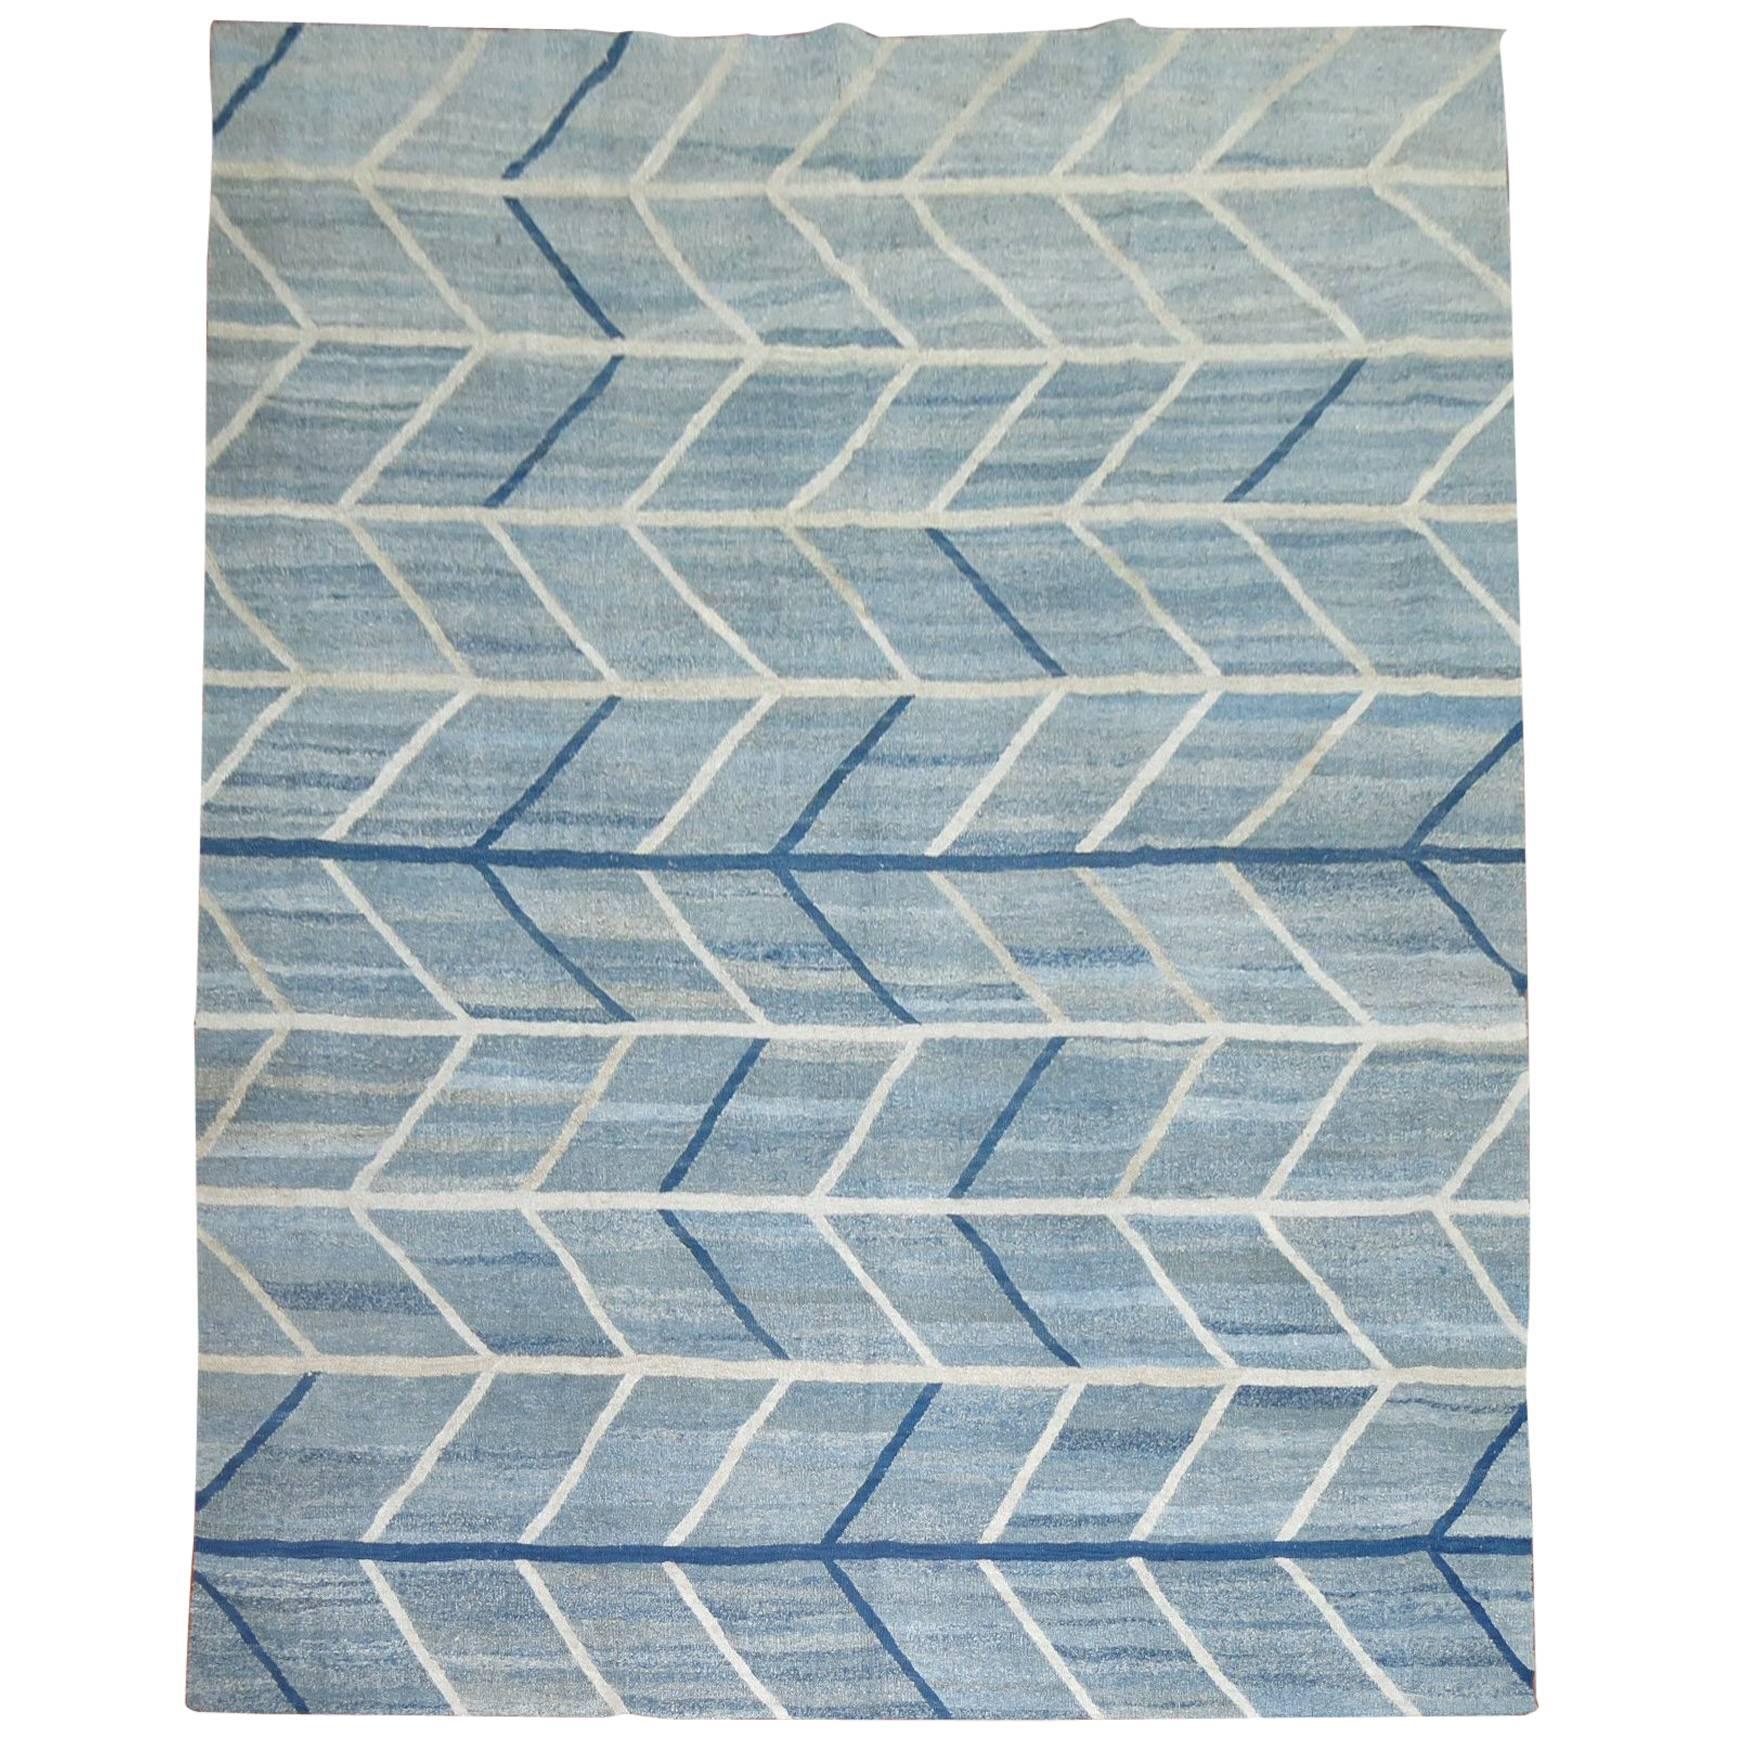 Scandinavian Inspired Turkish Kilim Flat-Weave Rug in Blues